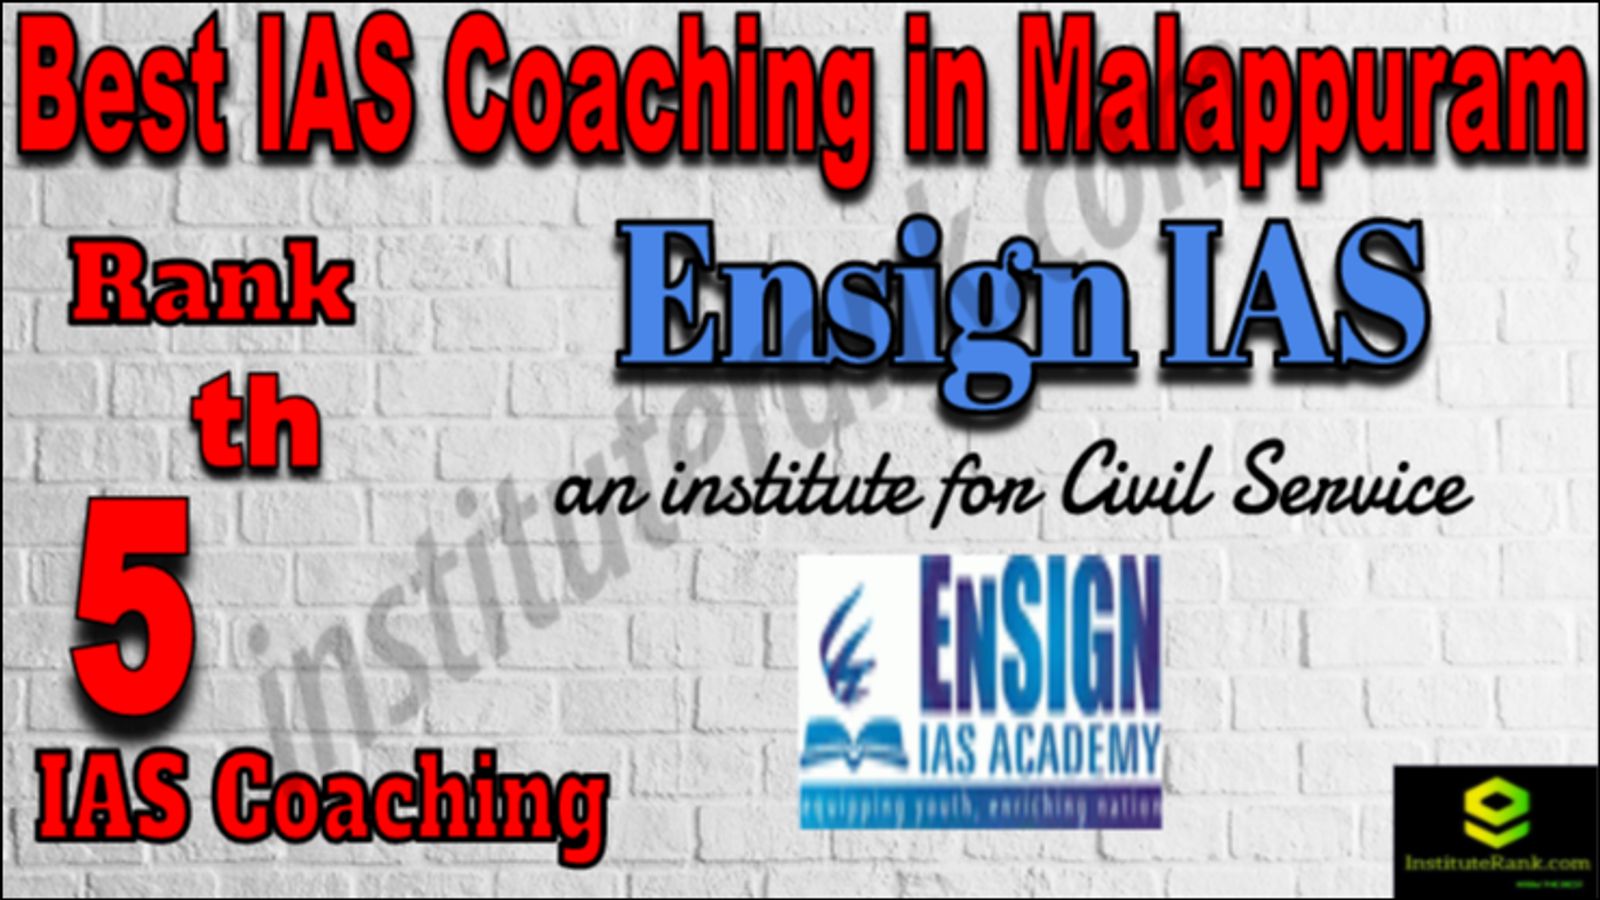 Rank 5 Best IAS Coaching in Malappuram